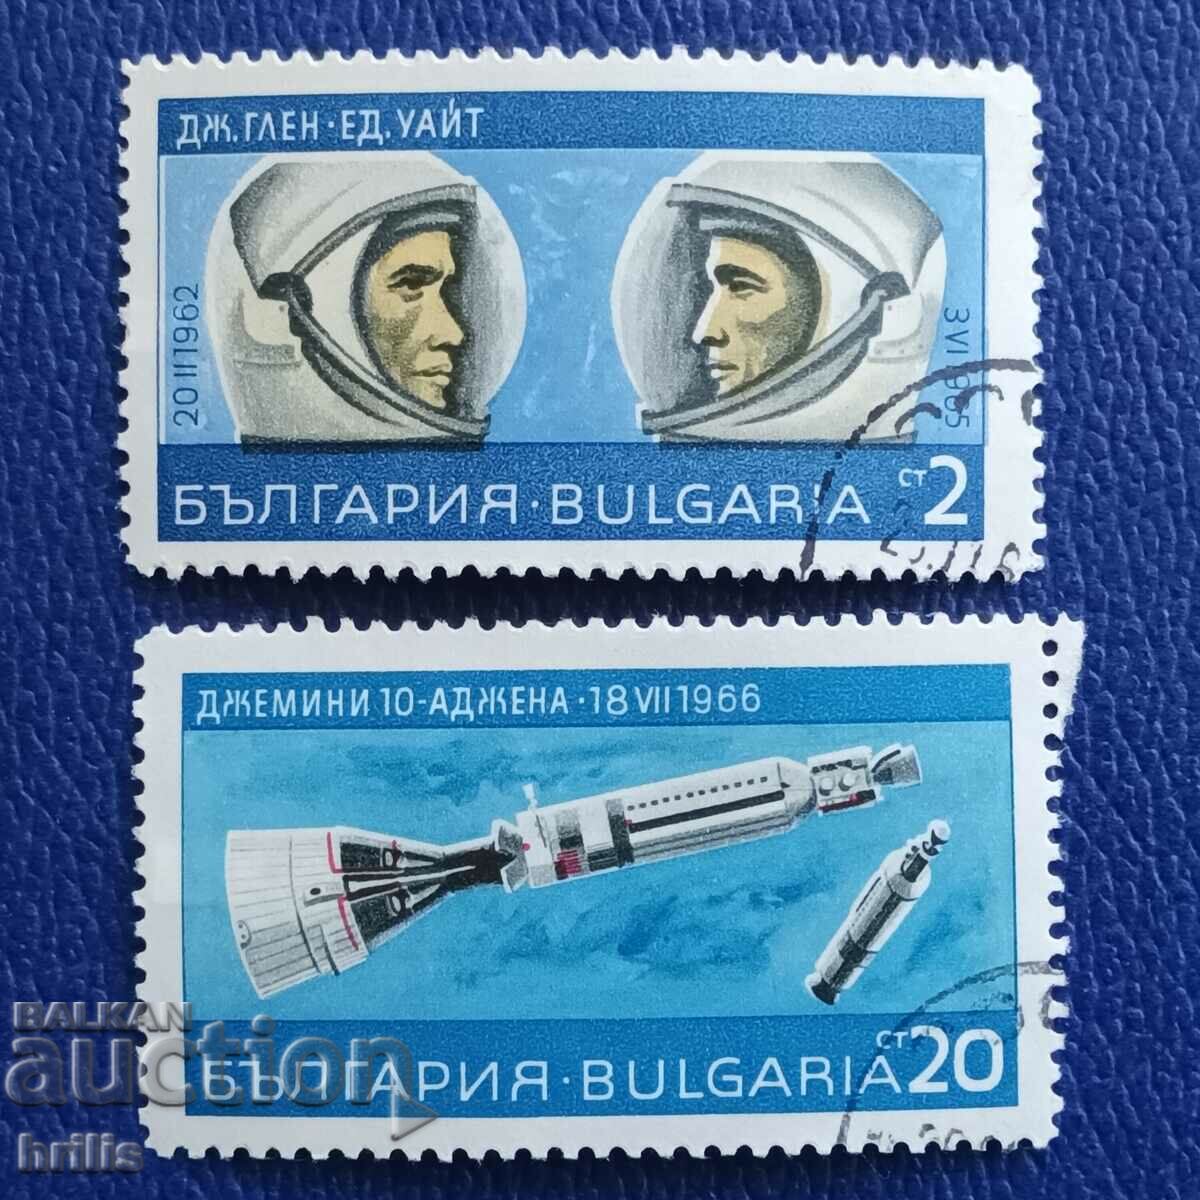 BULGARIA 1960s - SPACE